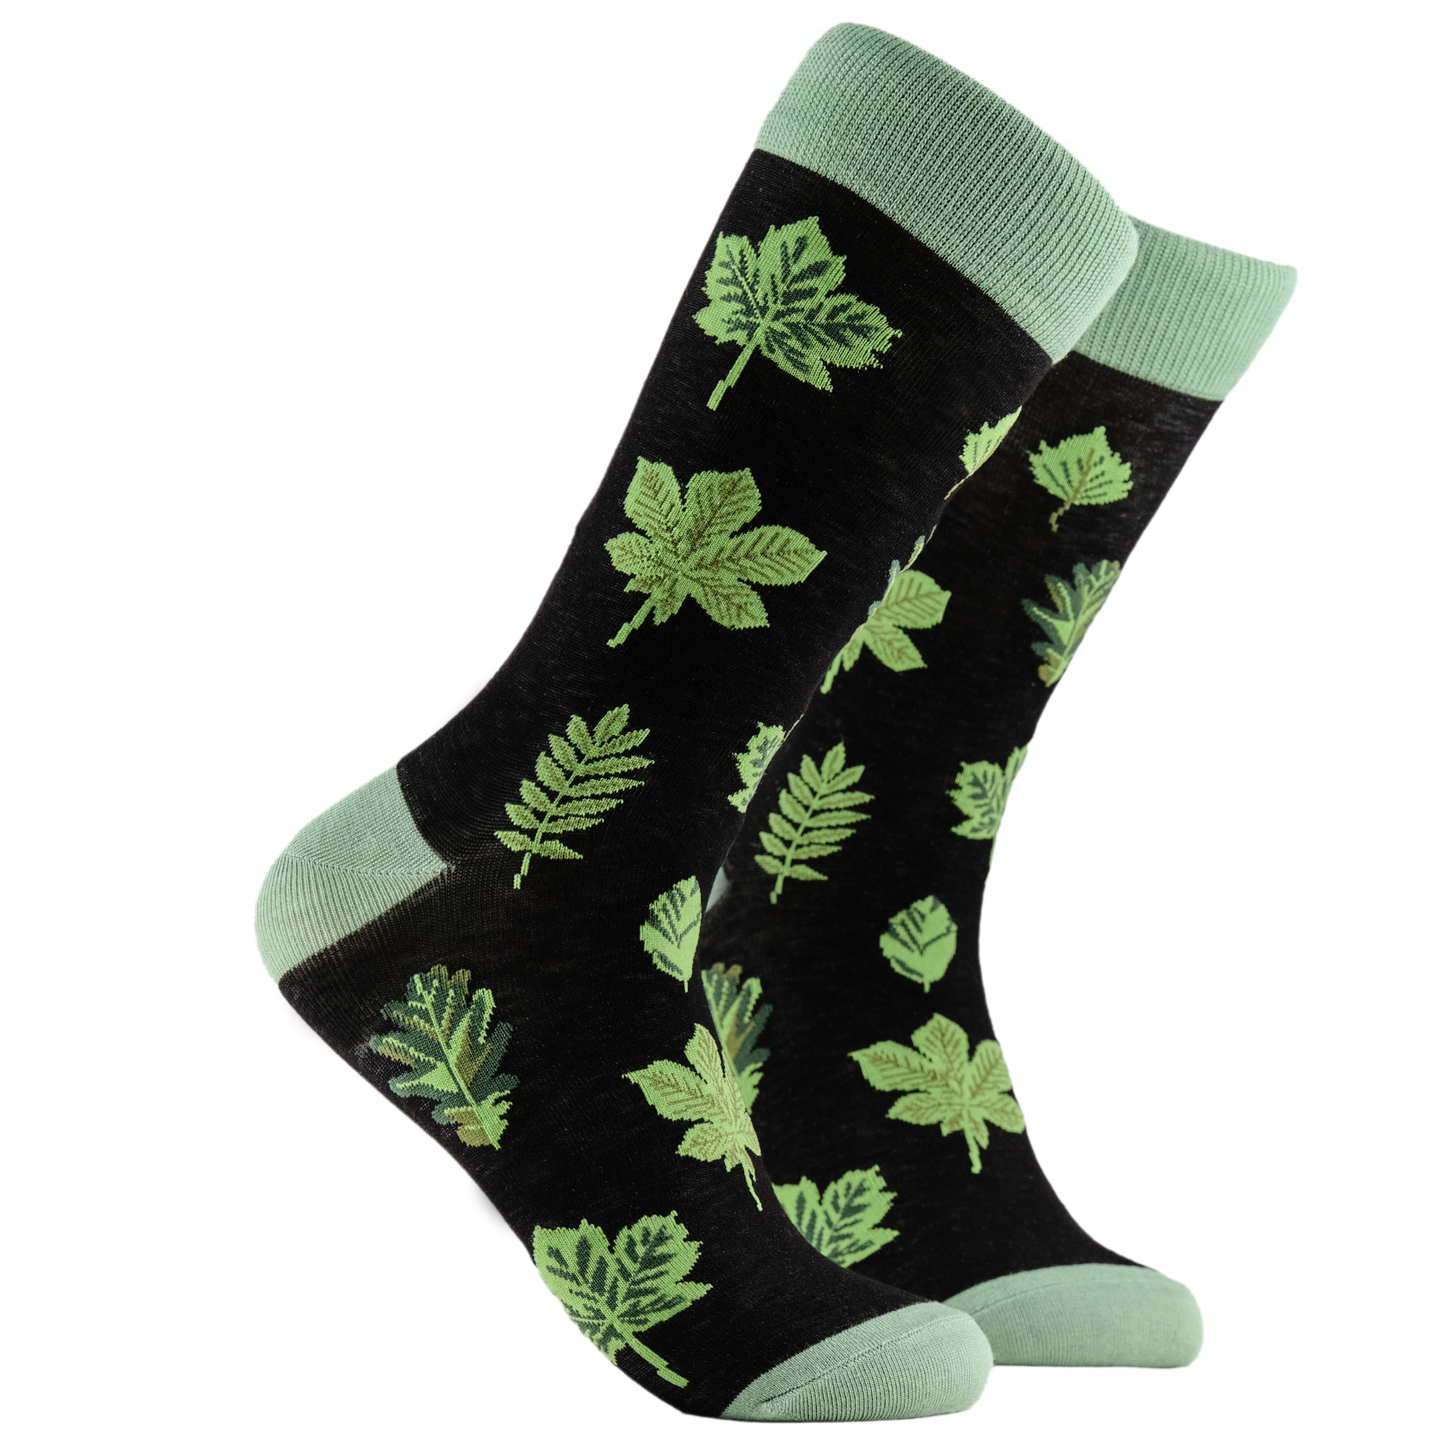 Leaves Bamboo Socks. A pair of socks depicting bamboo leaves. Black legs, light green cuff, heel and toe.